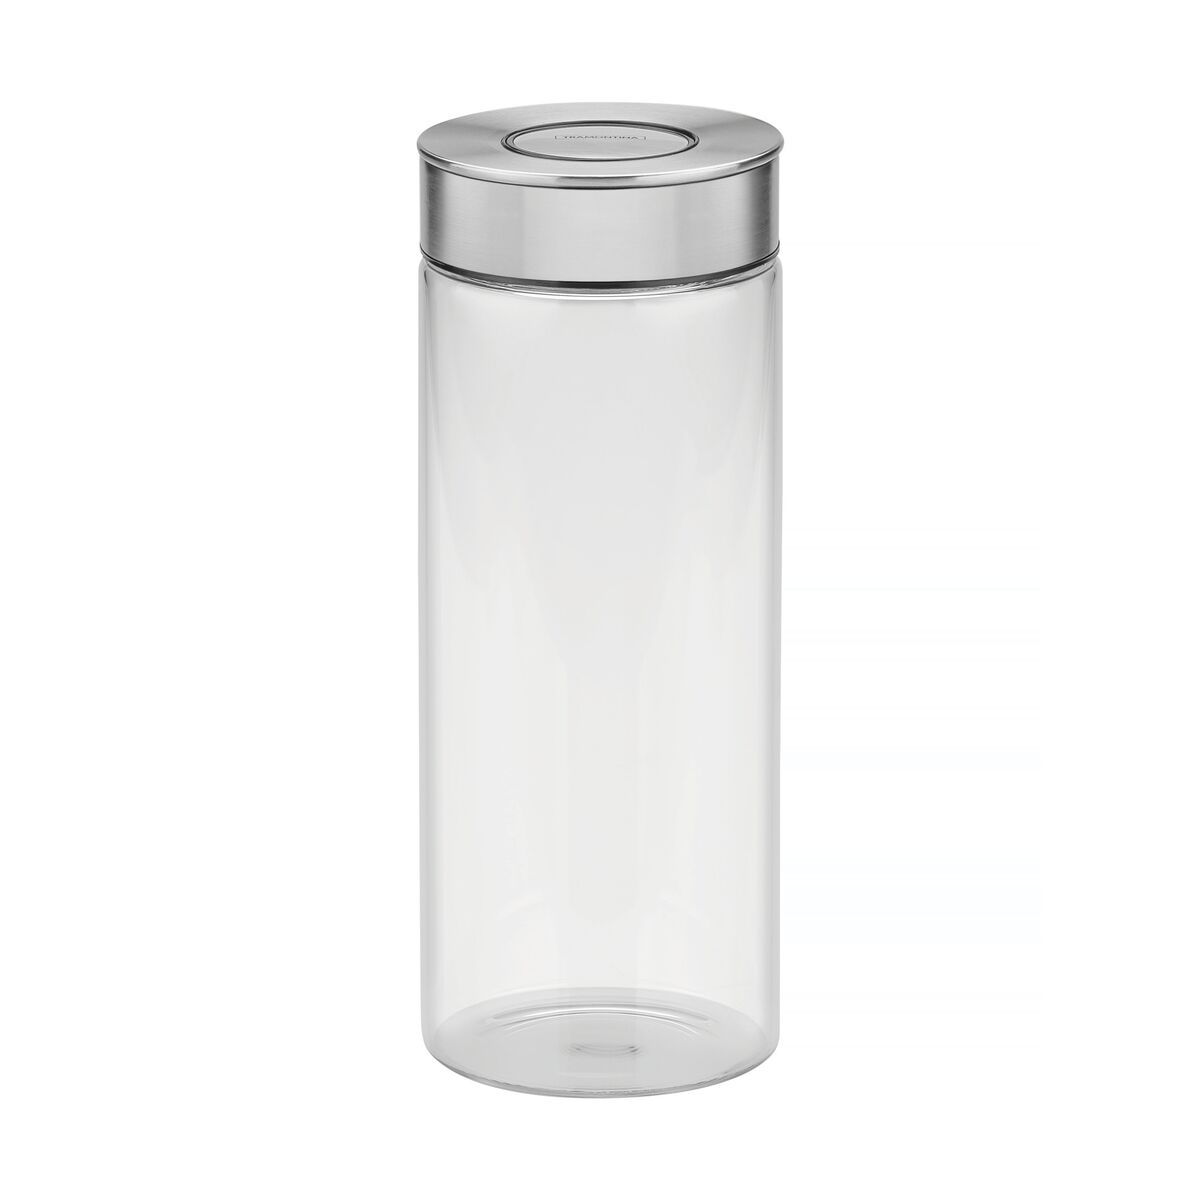 Tramontina Purezza glass jar with stainless steel lid, 1.8 L